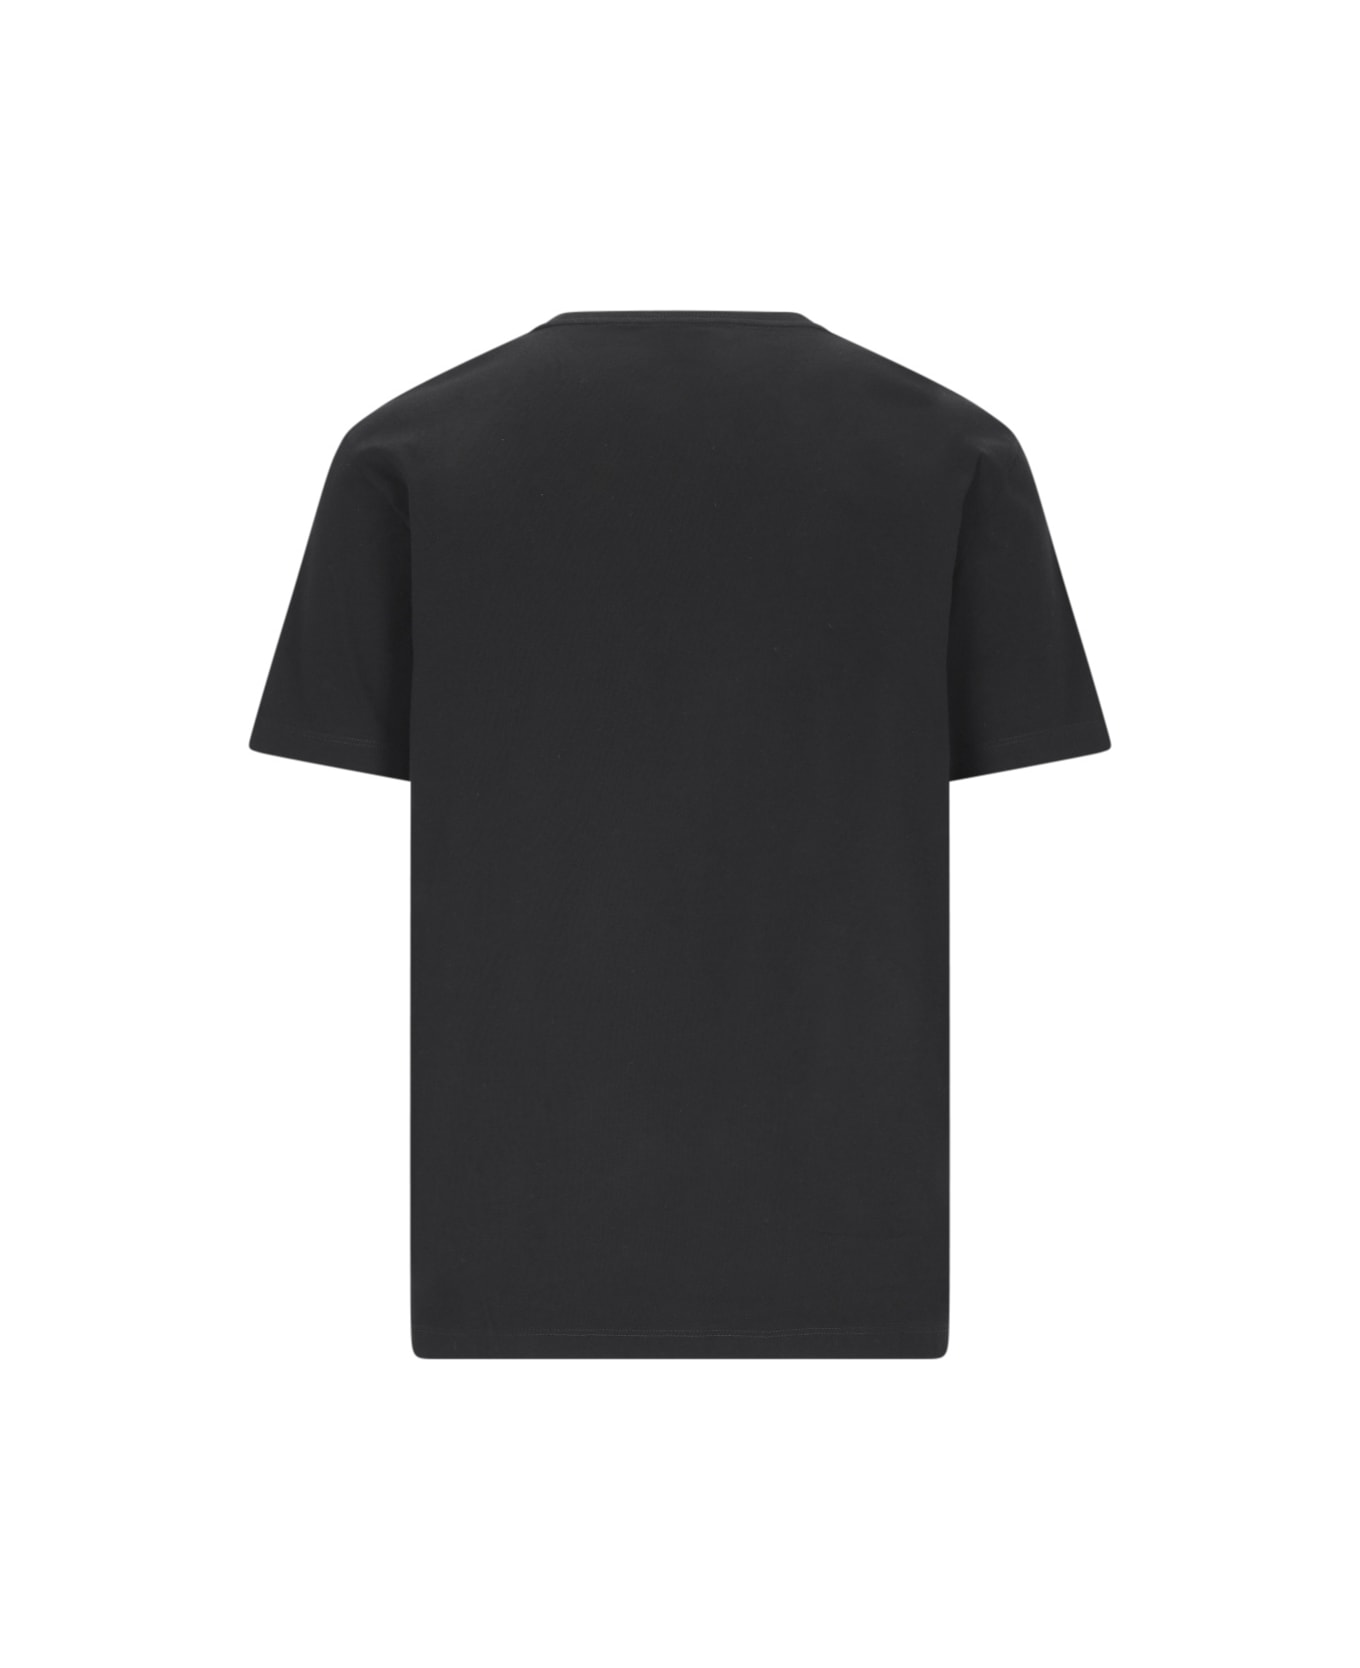 Versace Logo T-shirt - Black シャツ